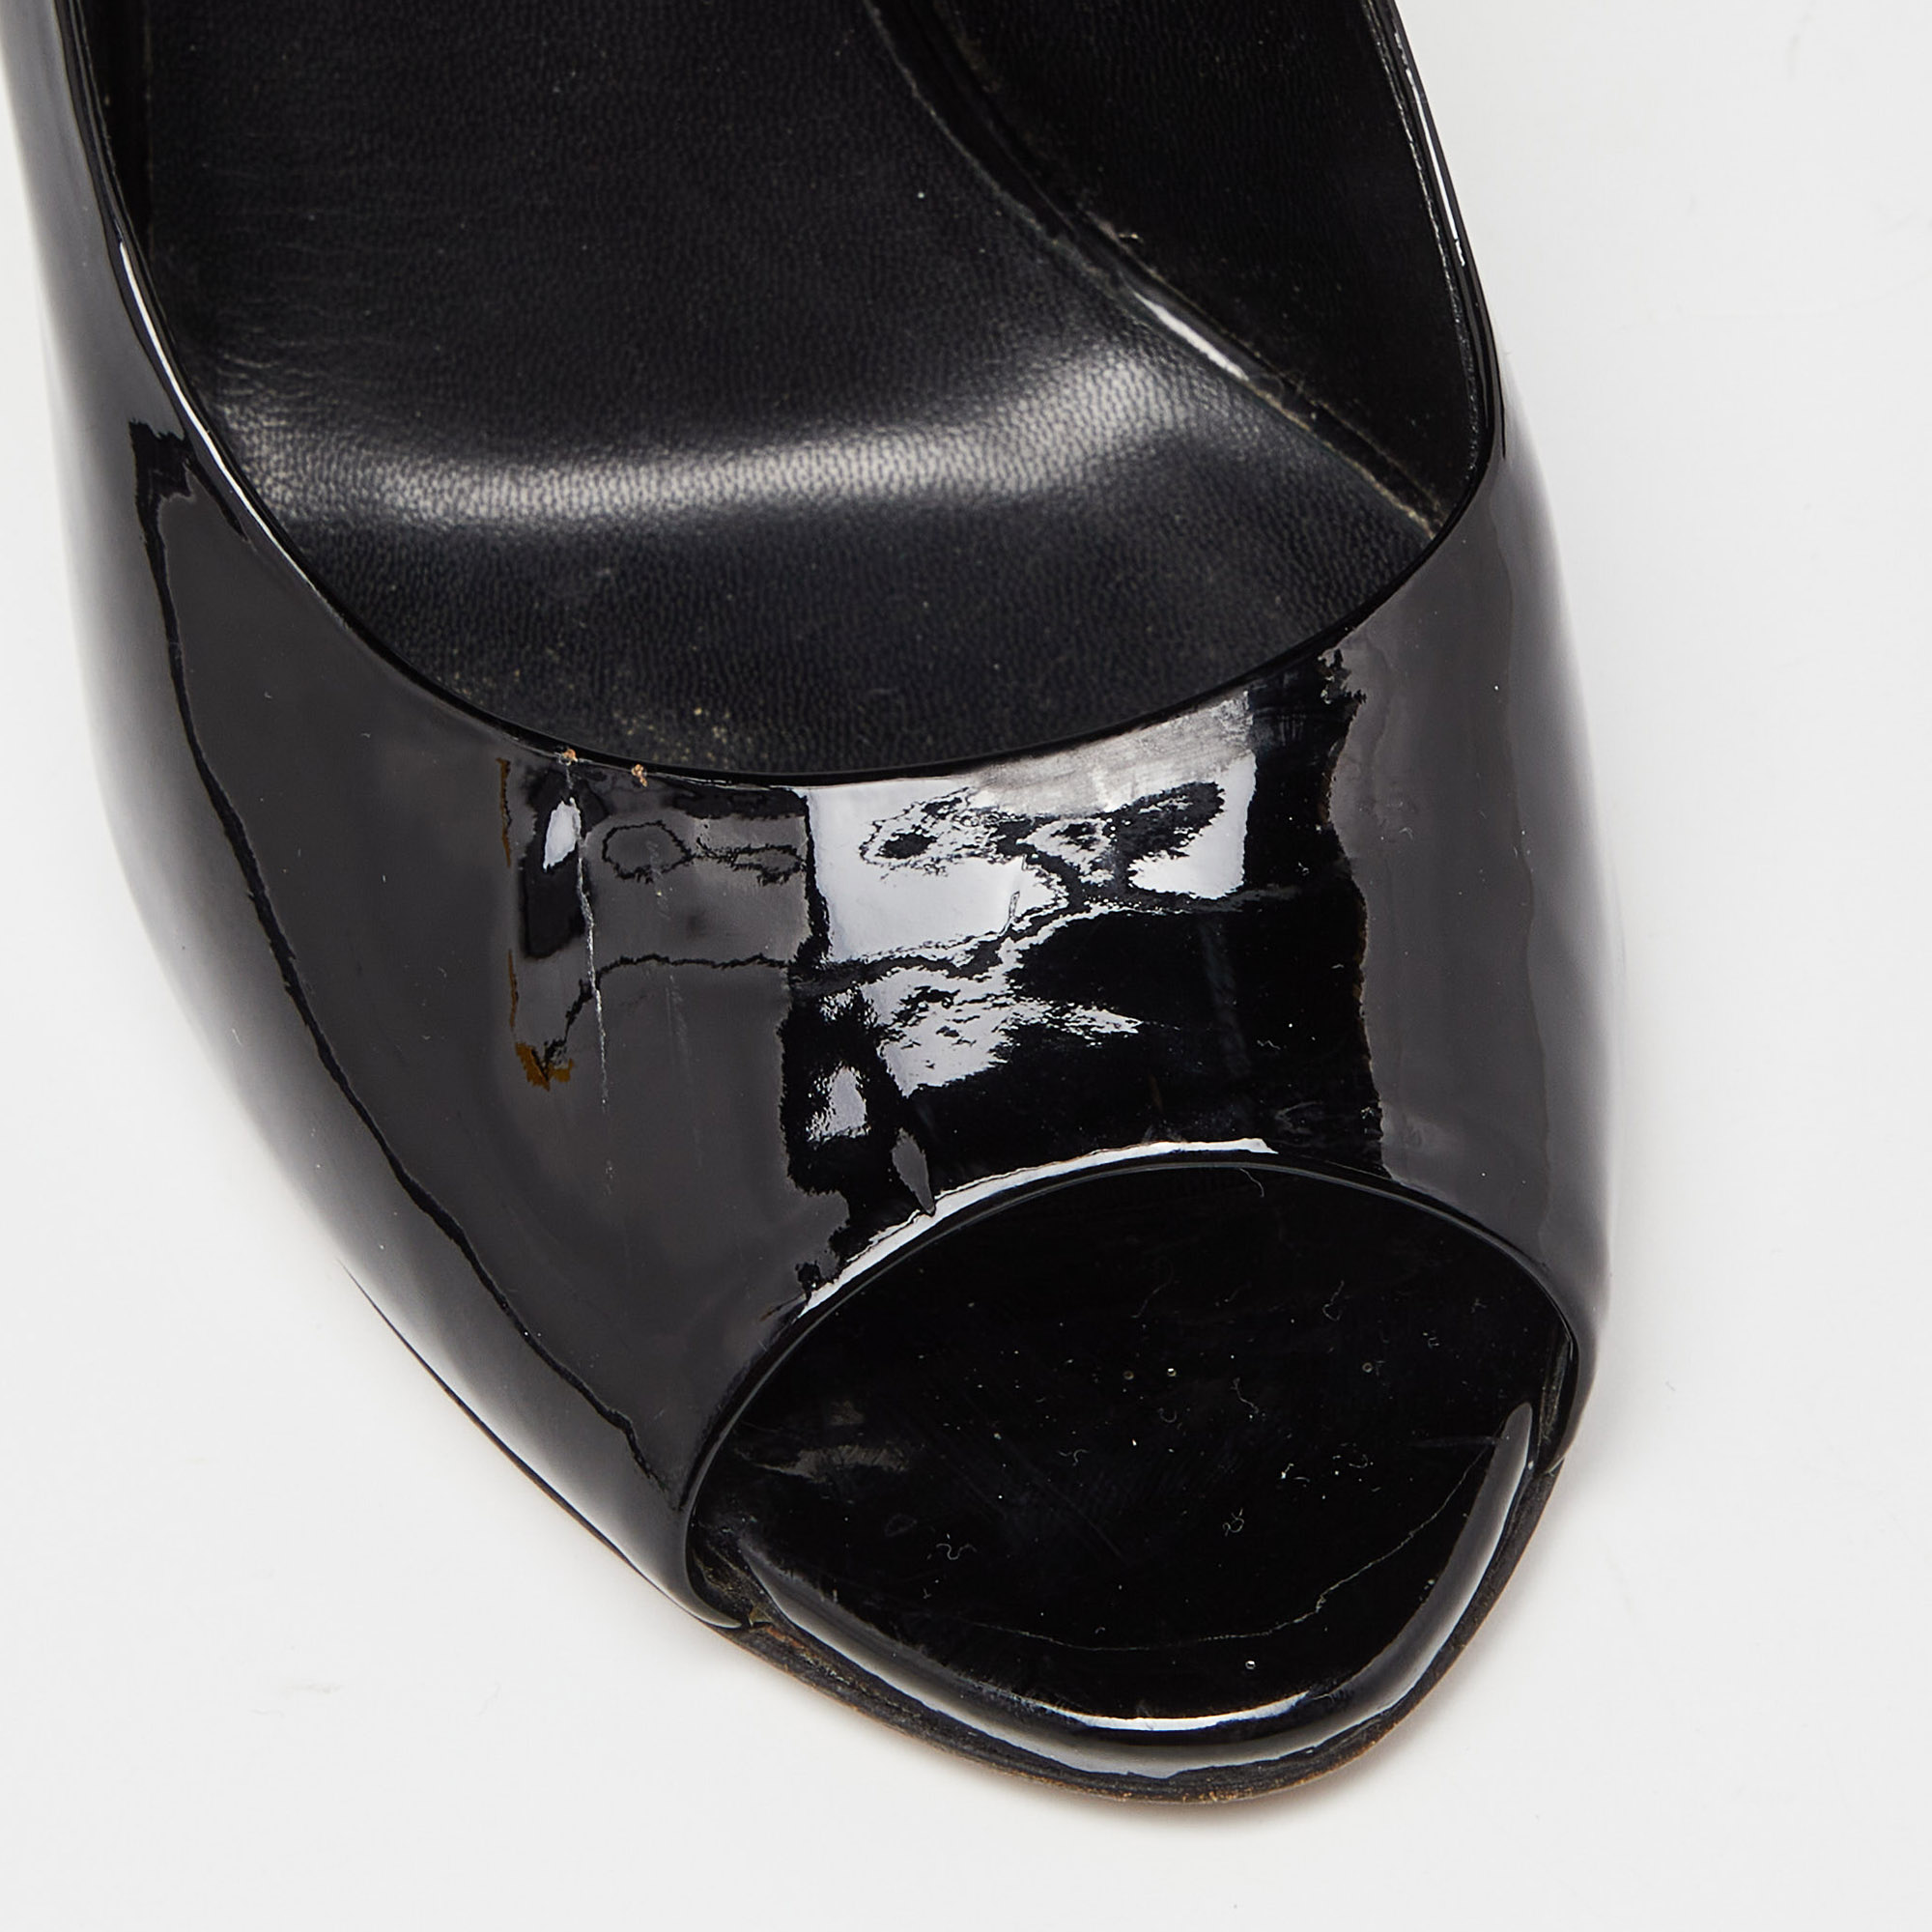 Gucci Black Patent Leather Peep Toe Pumps Size 37